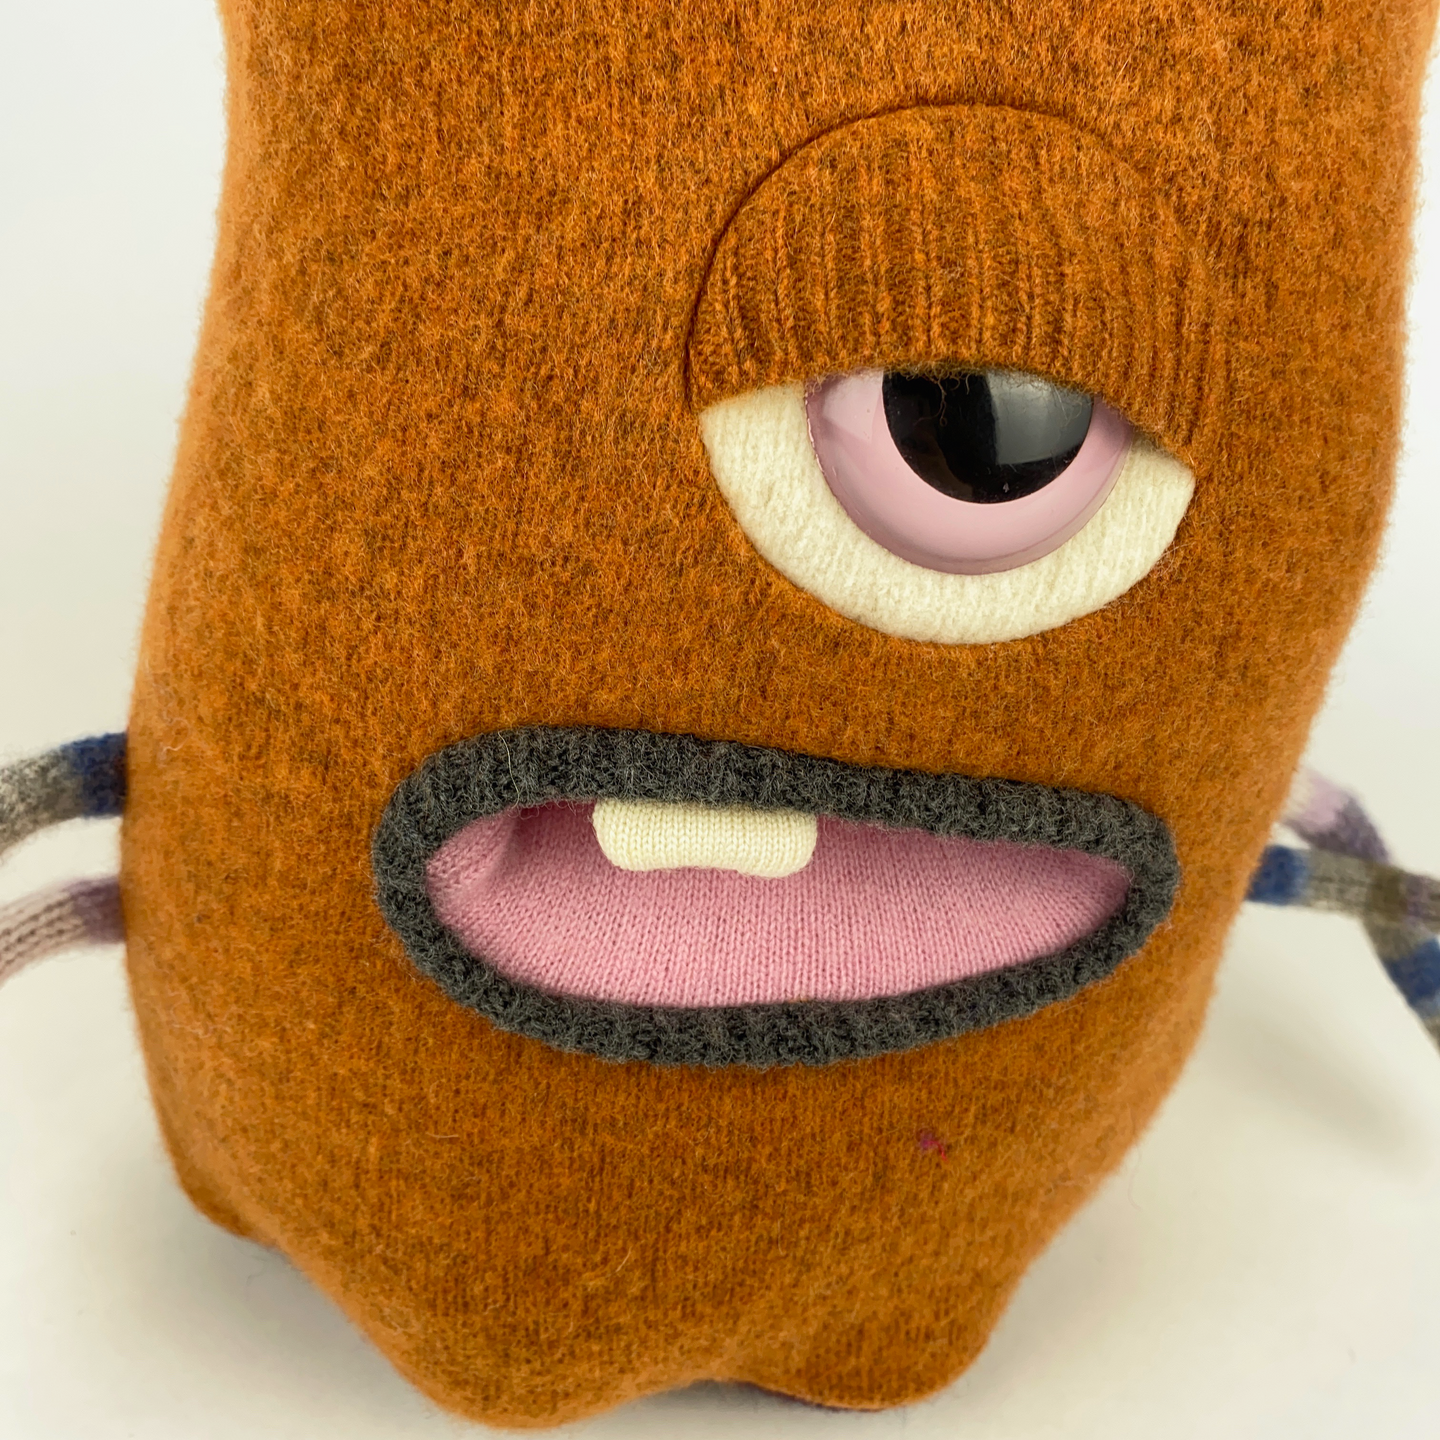 Bert the handmade stuffed monster plush